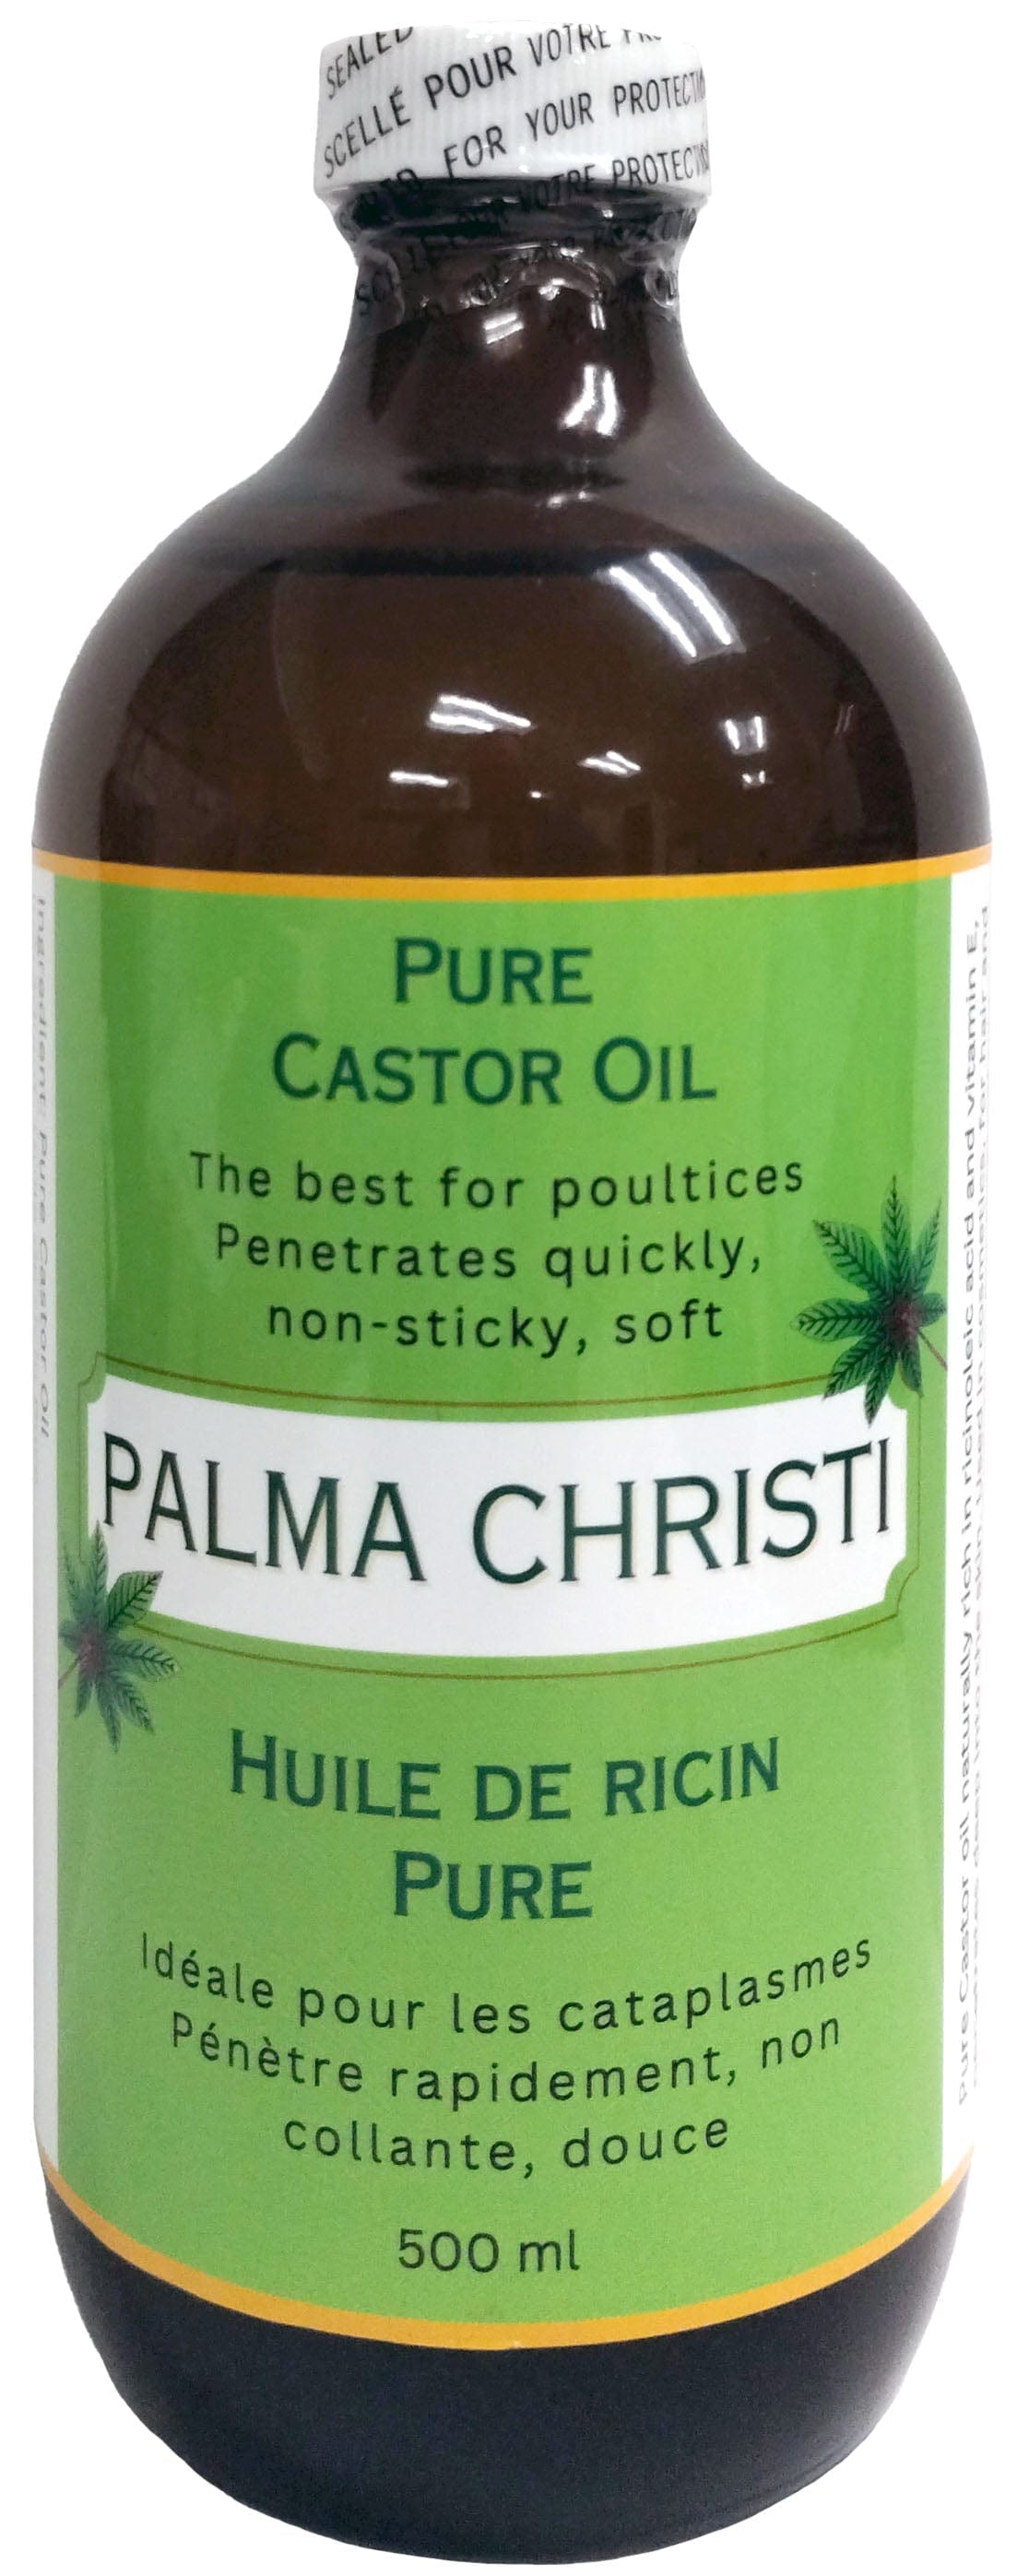 PALMA CHRISTI NATURELLE Soins & Beauté Palma christi (huile de ricin) 500ml